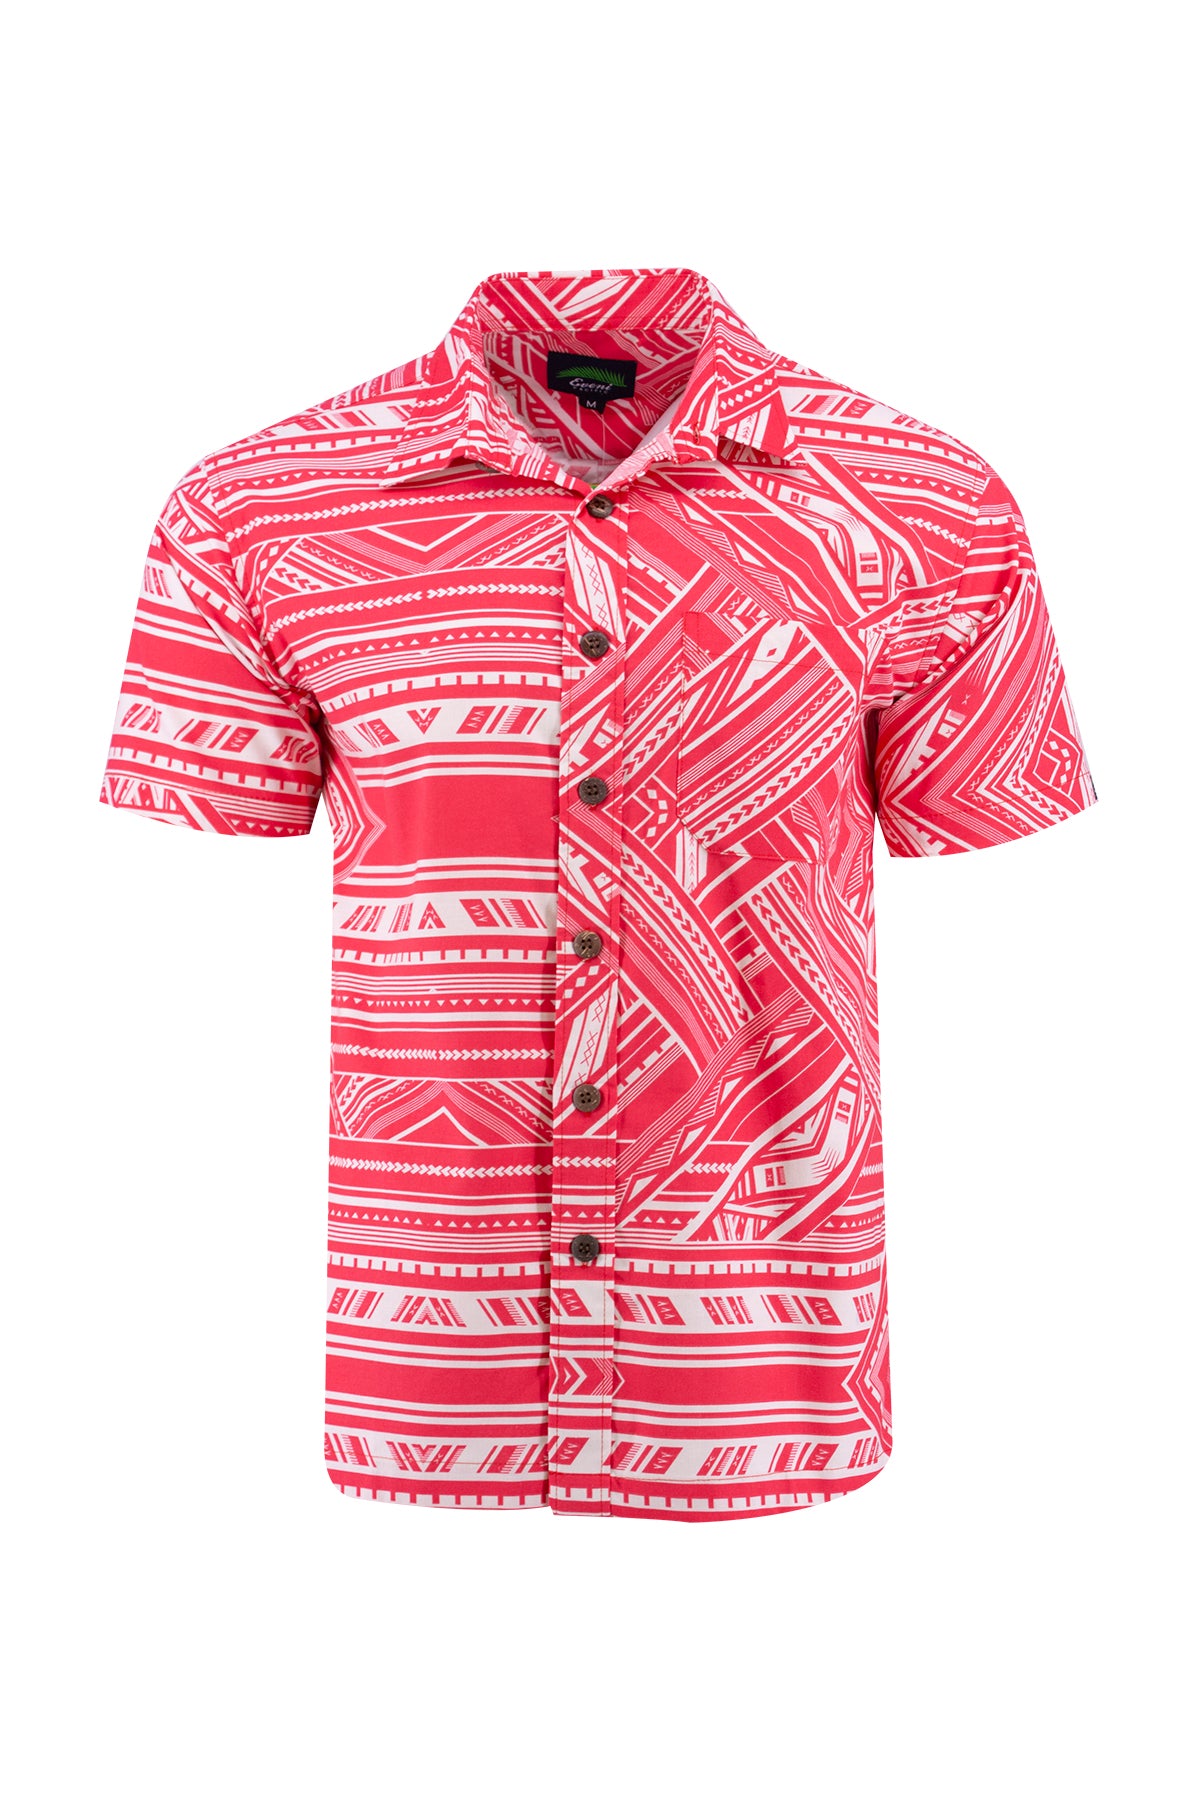 Eveni Pacific Men's Classic Shirt - POINSETTIA RED